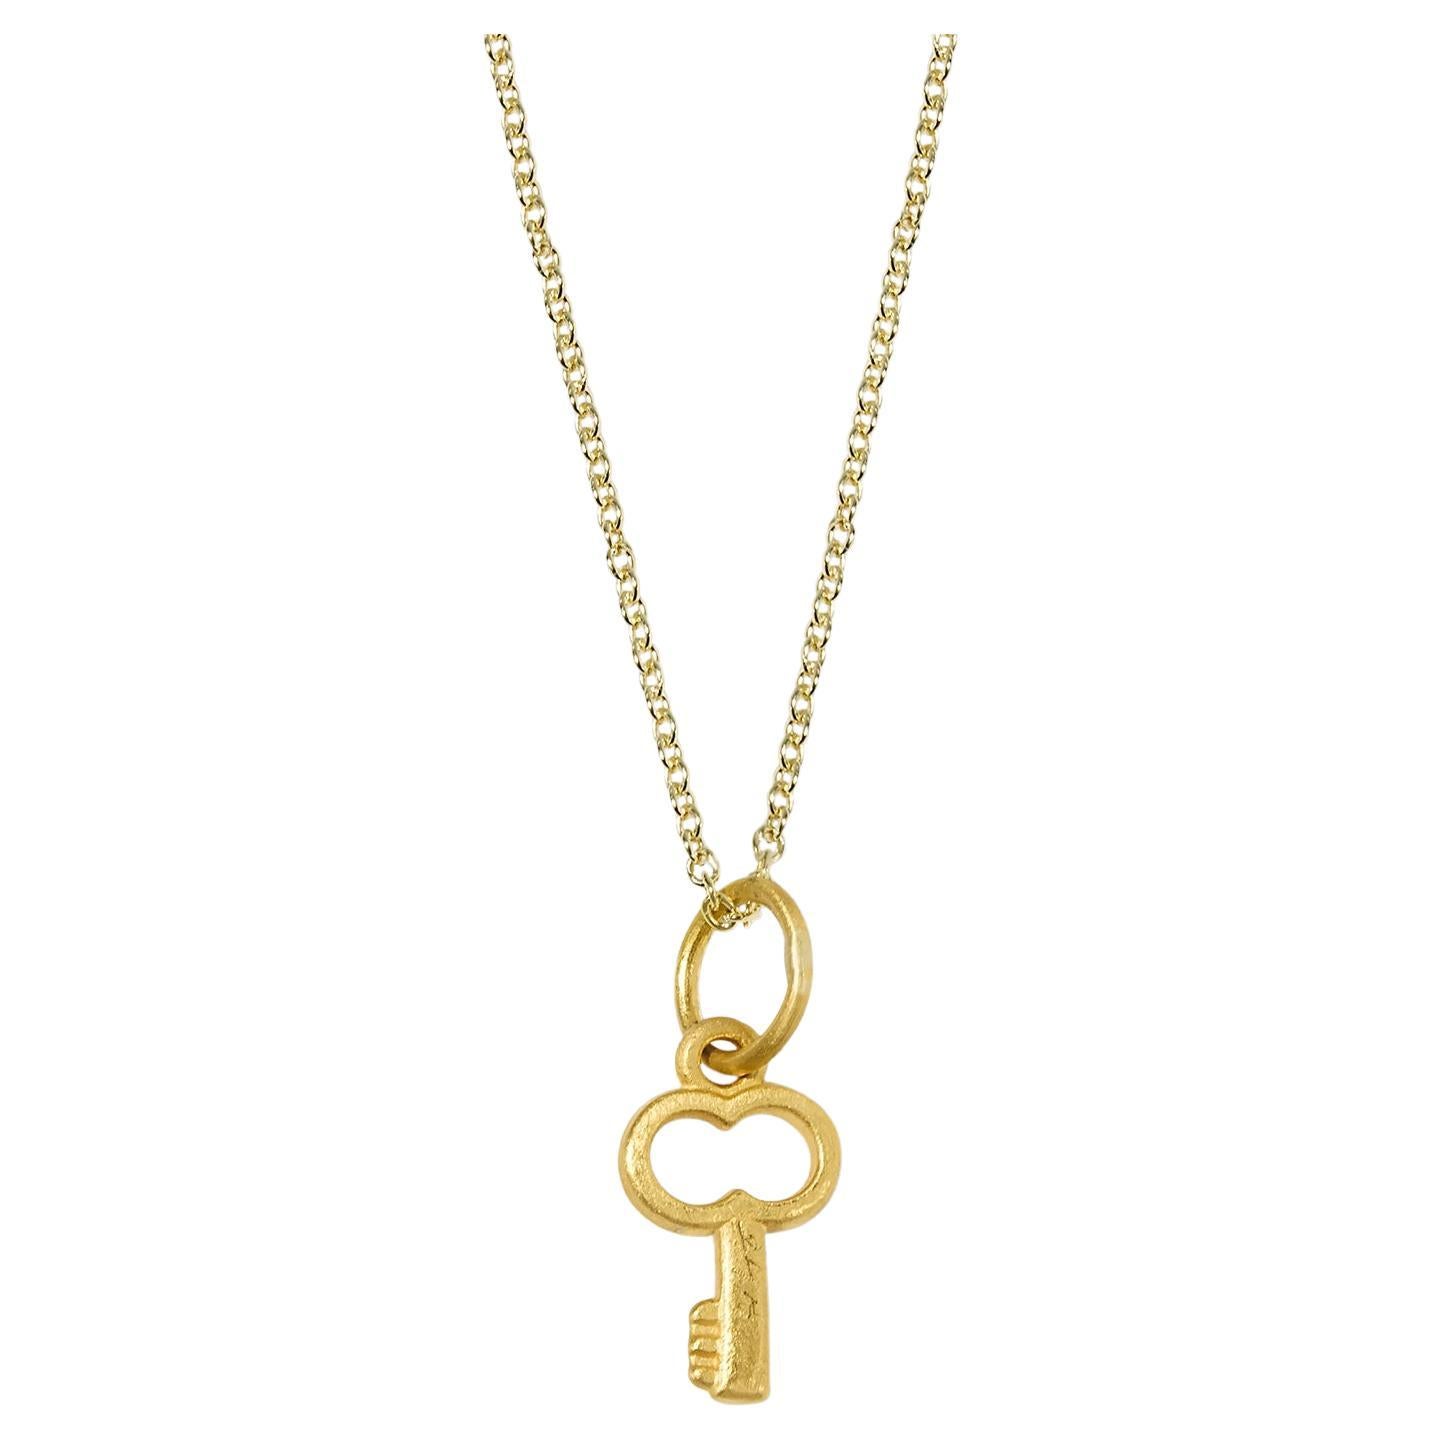 Miniature Key Charm Anhänger Halskette, 24kt Solid Gold